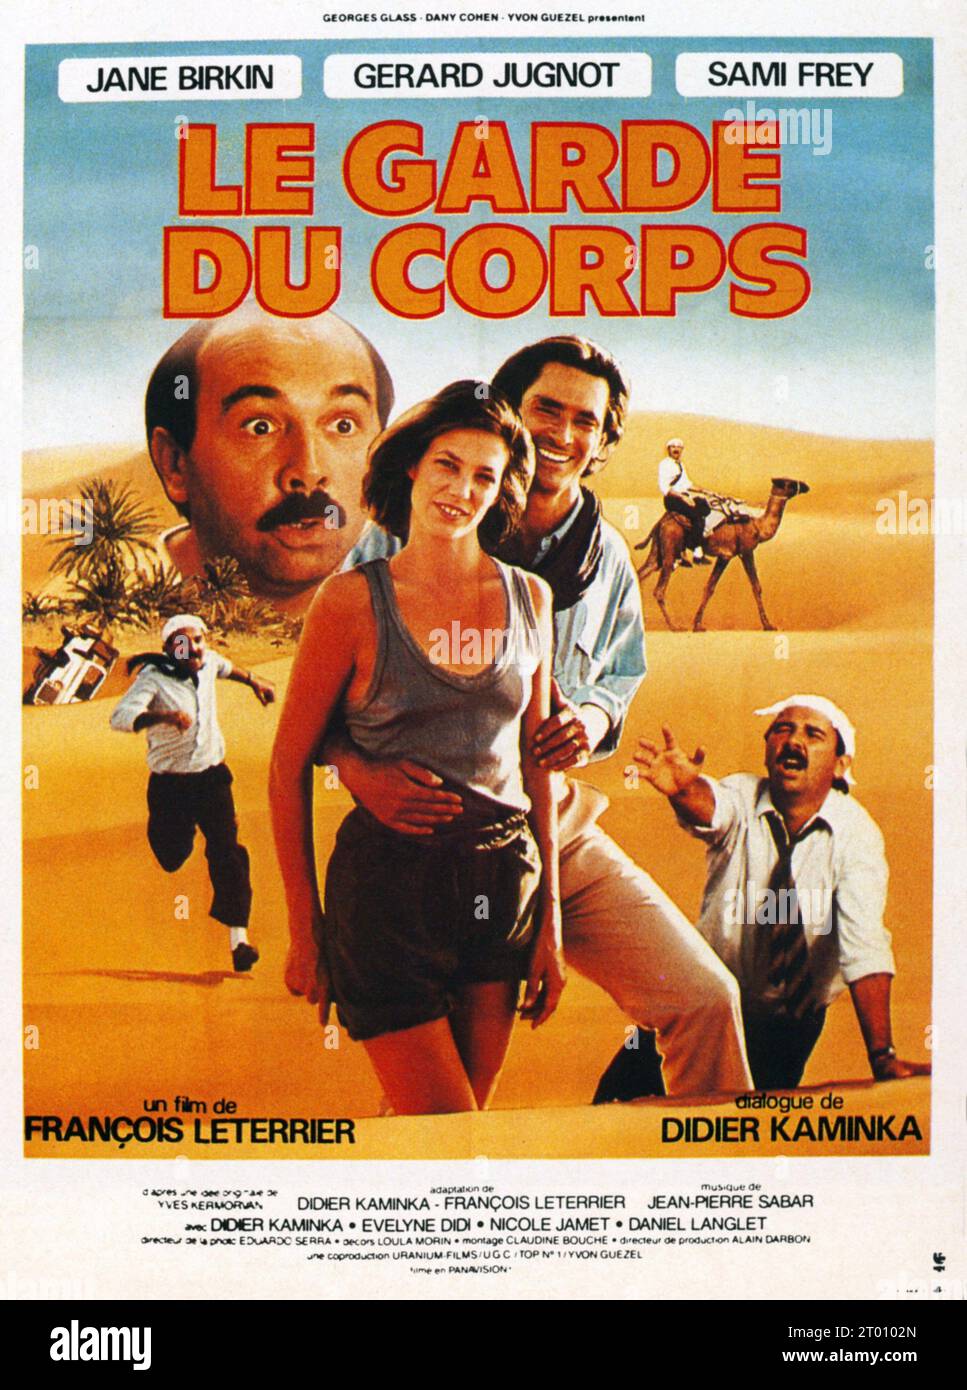 Le Garde du corps Year : 1984 - France Director : François Leterrier Jane Birkin, Sami Frey, Gerard Jugnot French poster Stock Photo